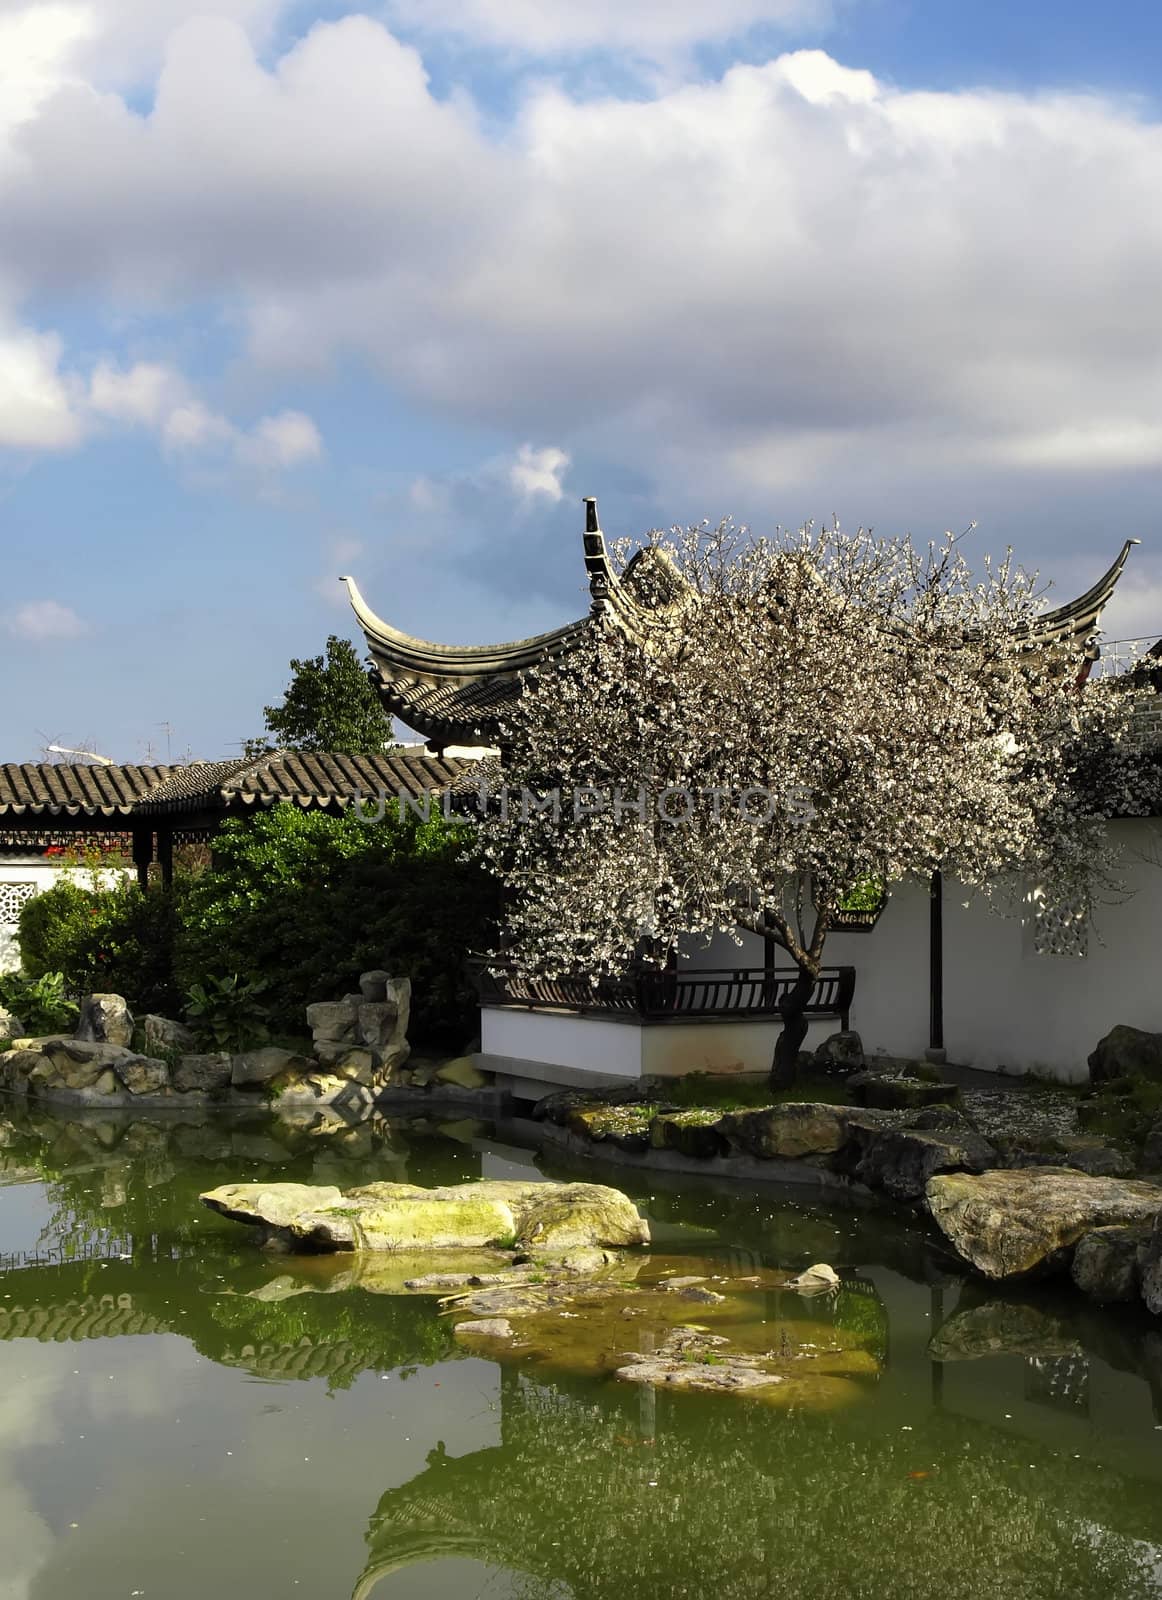 Details of an authentic Asian garden      